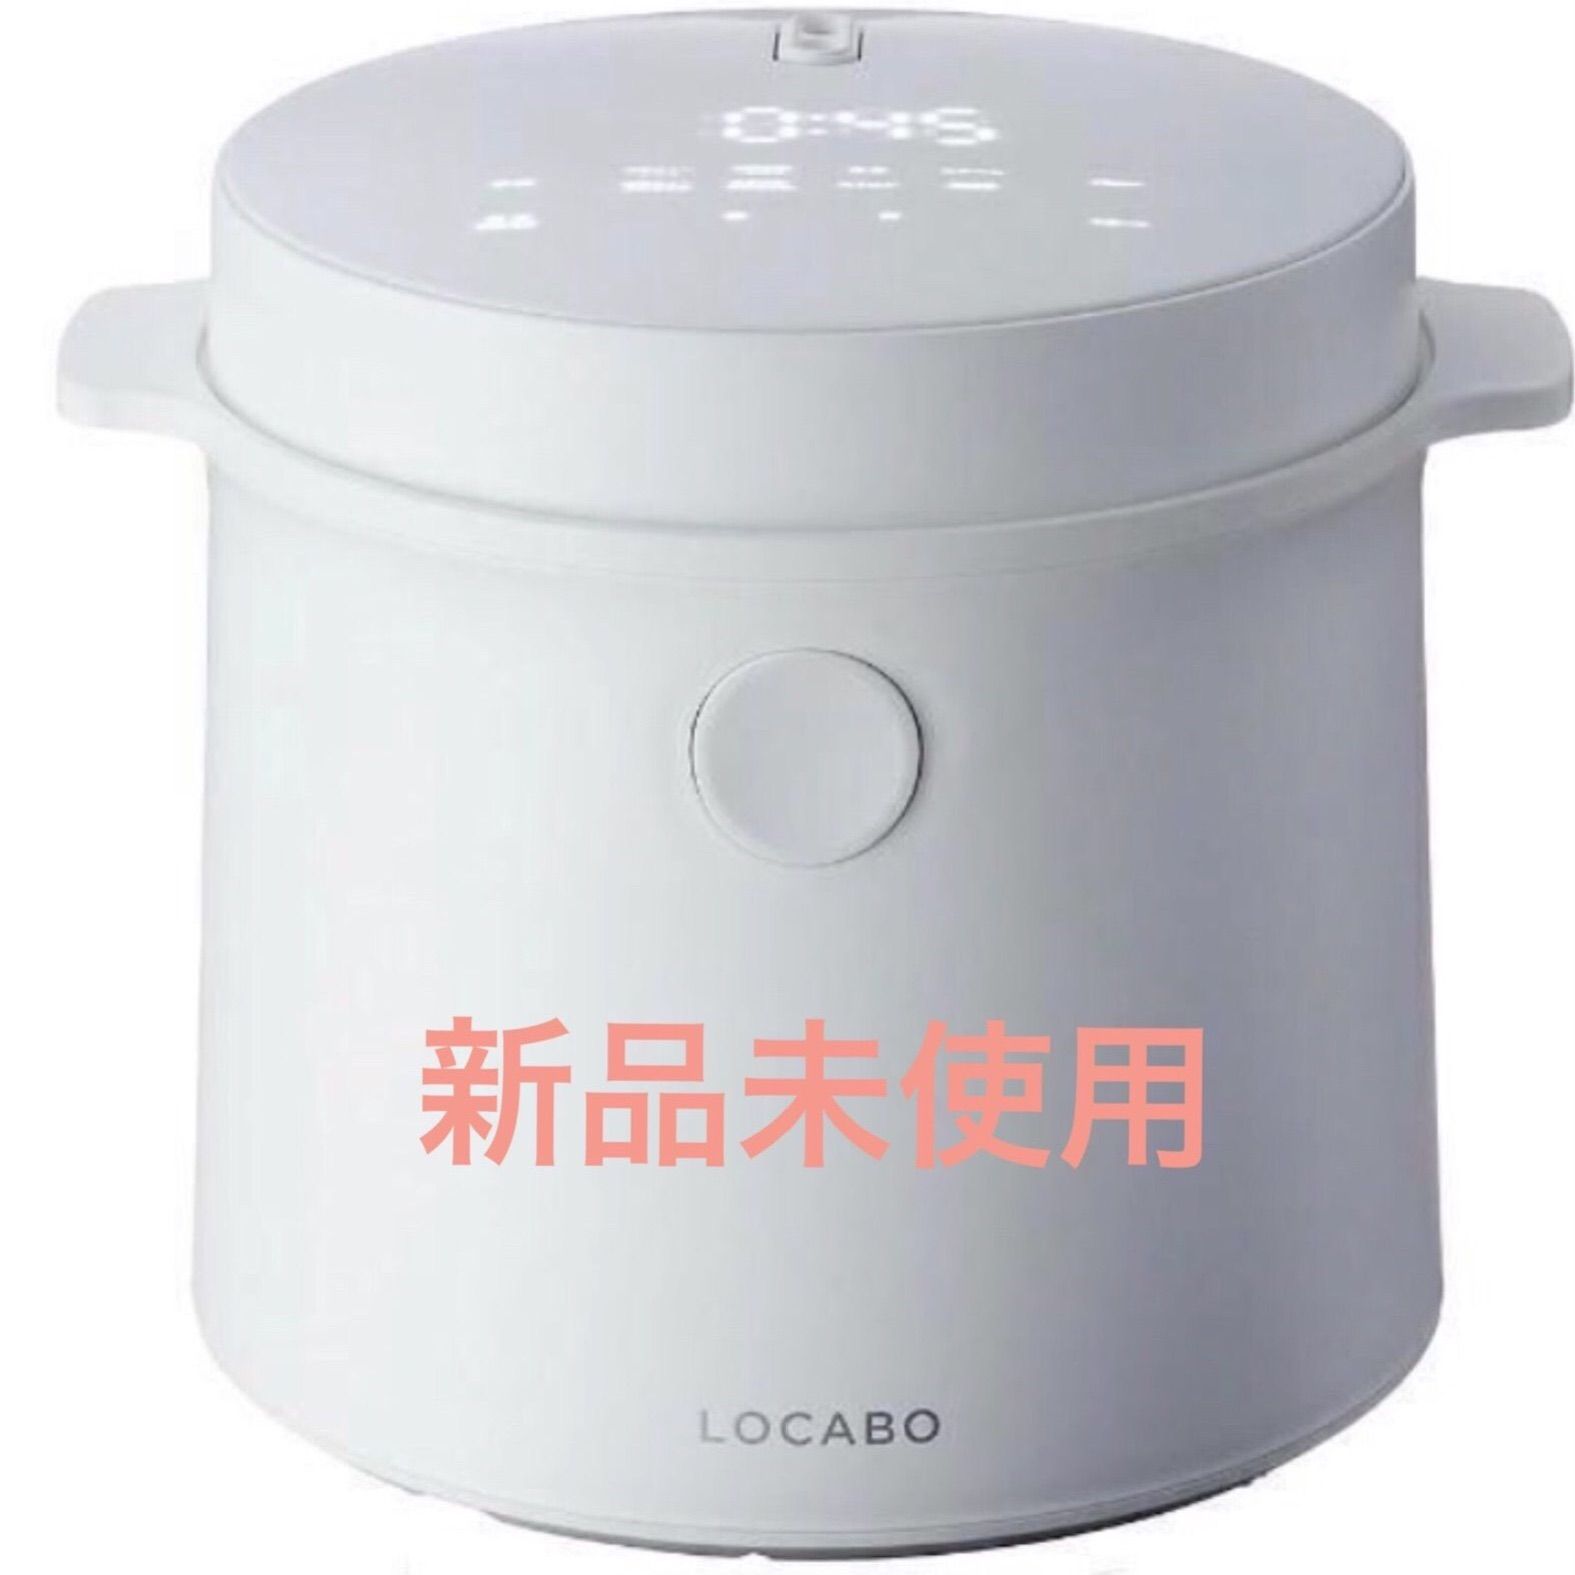 LOCABO 糖質カット炊飯器 ホワイト JM-C20E-W - 炊飯器・餅つき機